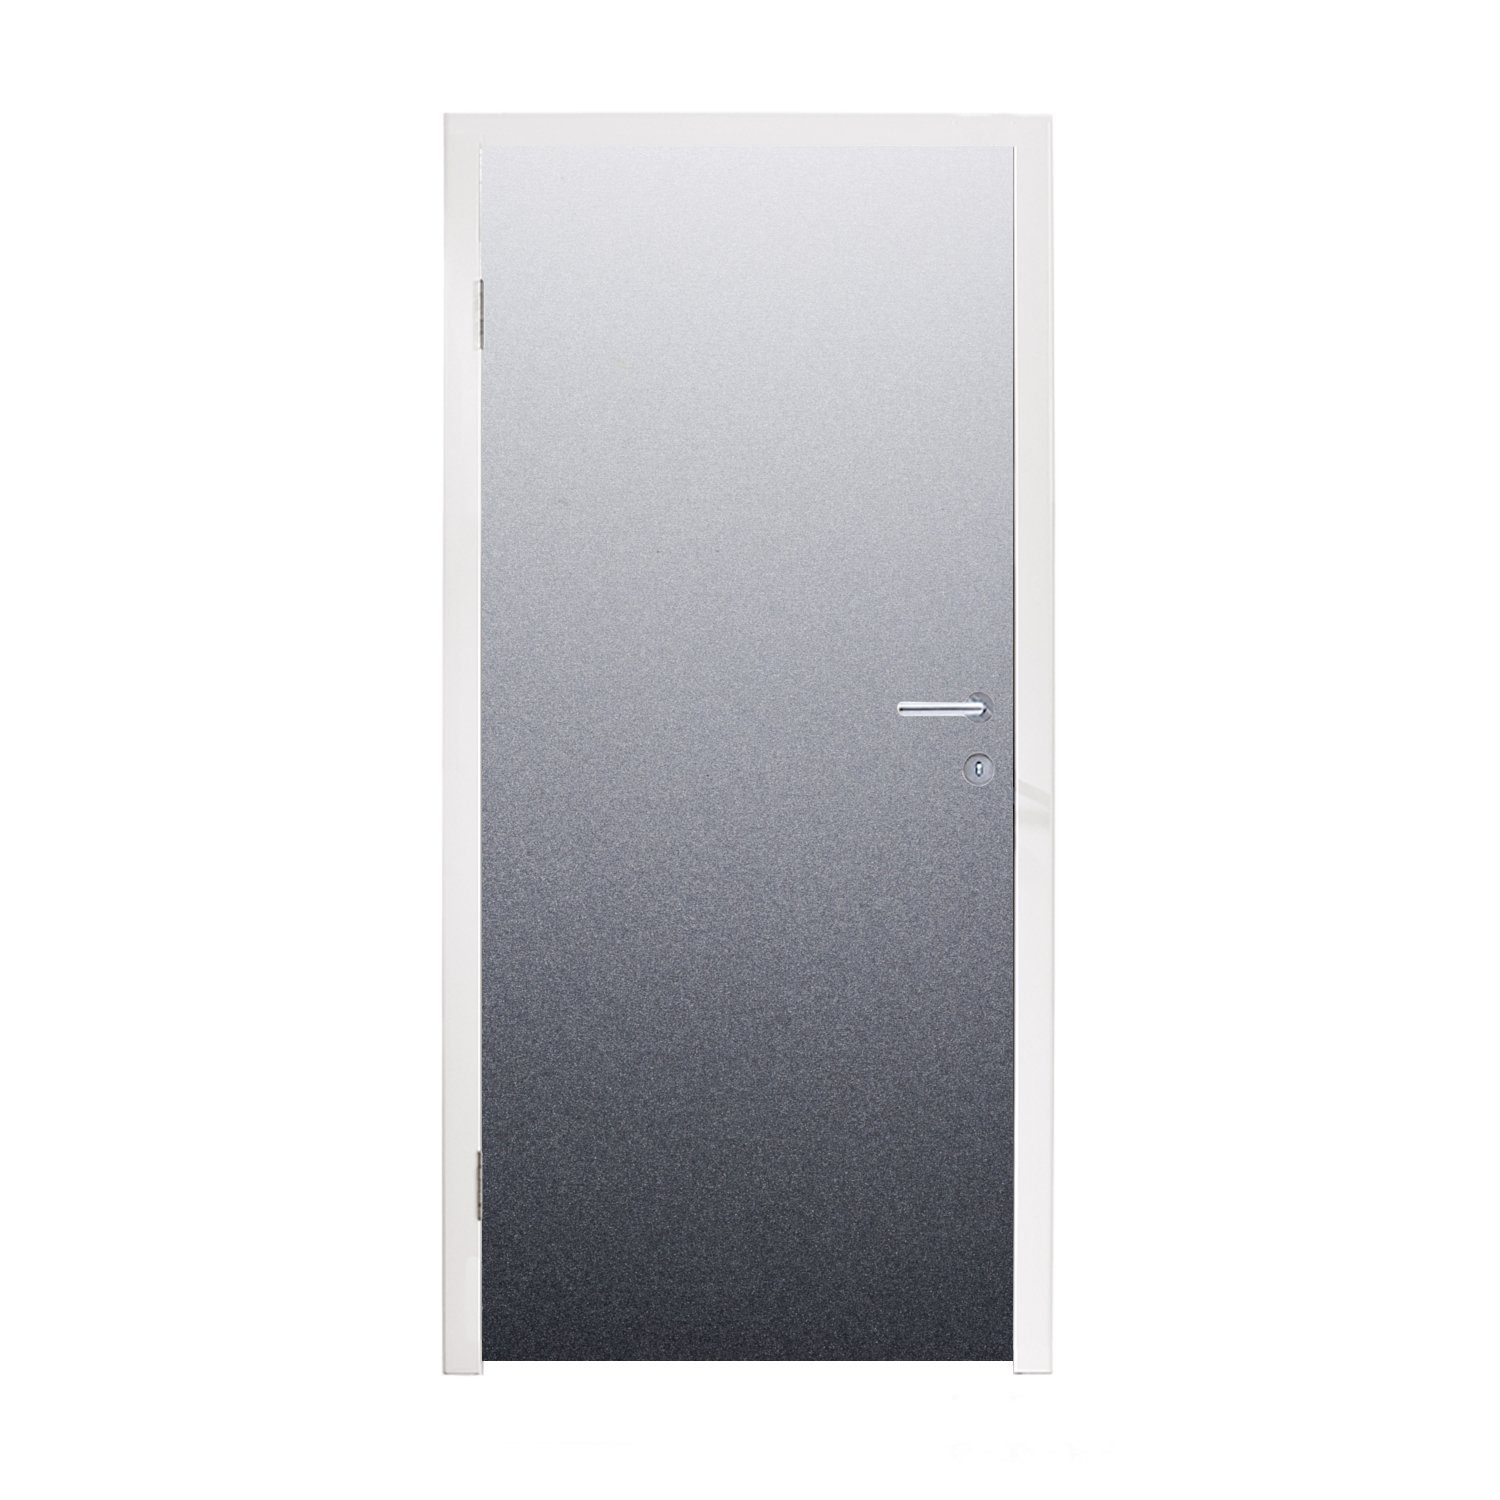 MuchoWow Türtapete Aluminiumdruck - Metall - Grau, Matt, bedruckt, (1 St), Fototapete für Tür, Türaufkleber, 75x205 cm